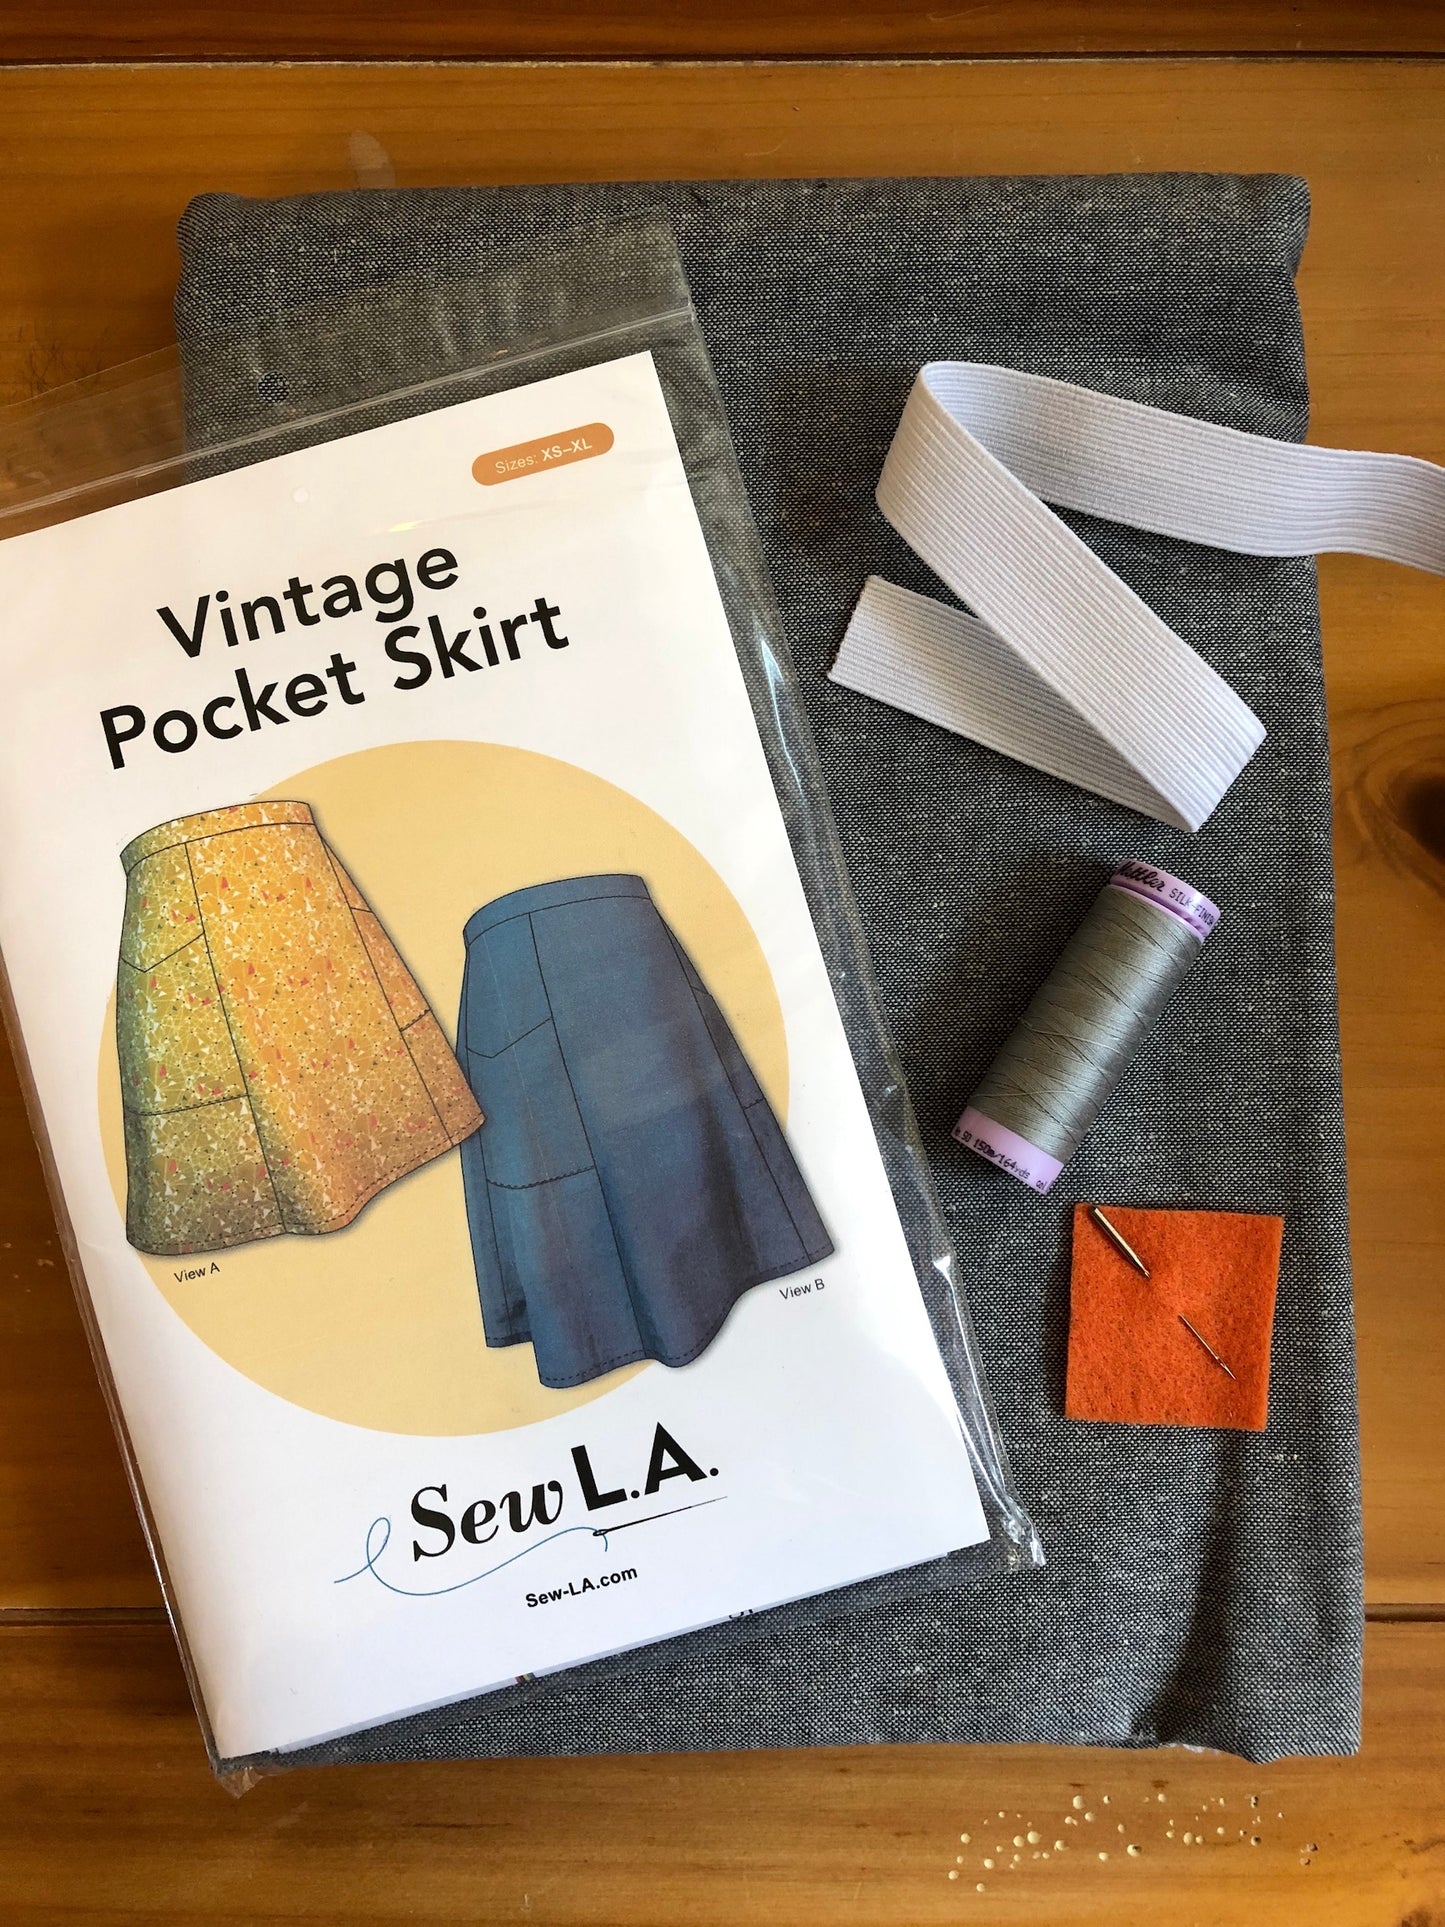 Vintage Pocket Skirt Kit